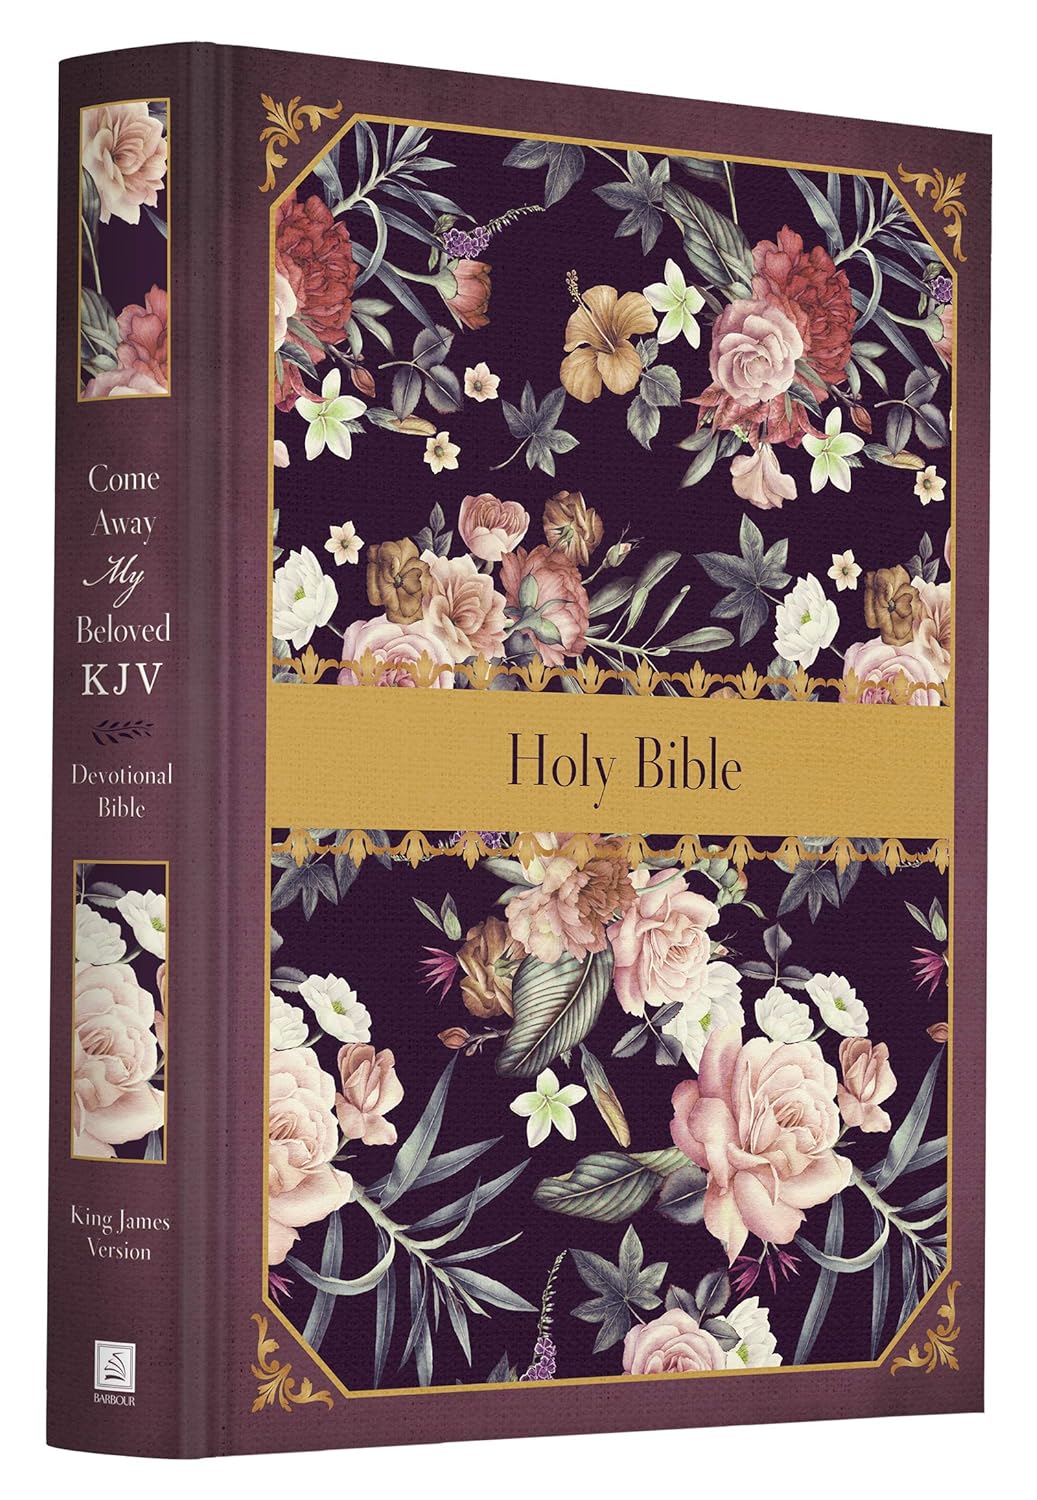 Come Away My Beloved KJV Devotional Bible (Hardcover)